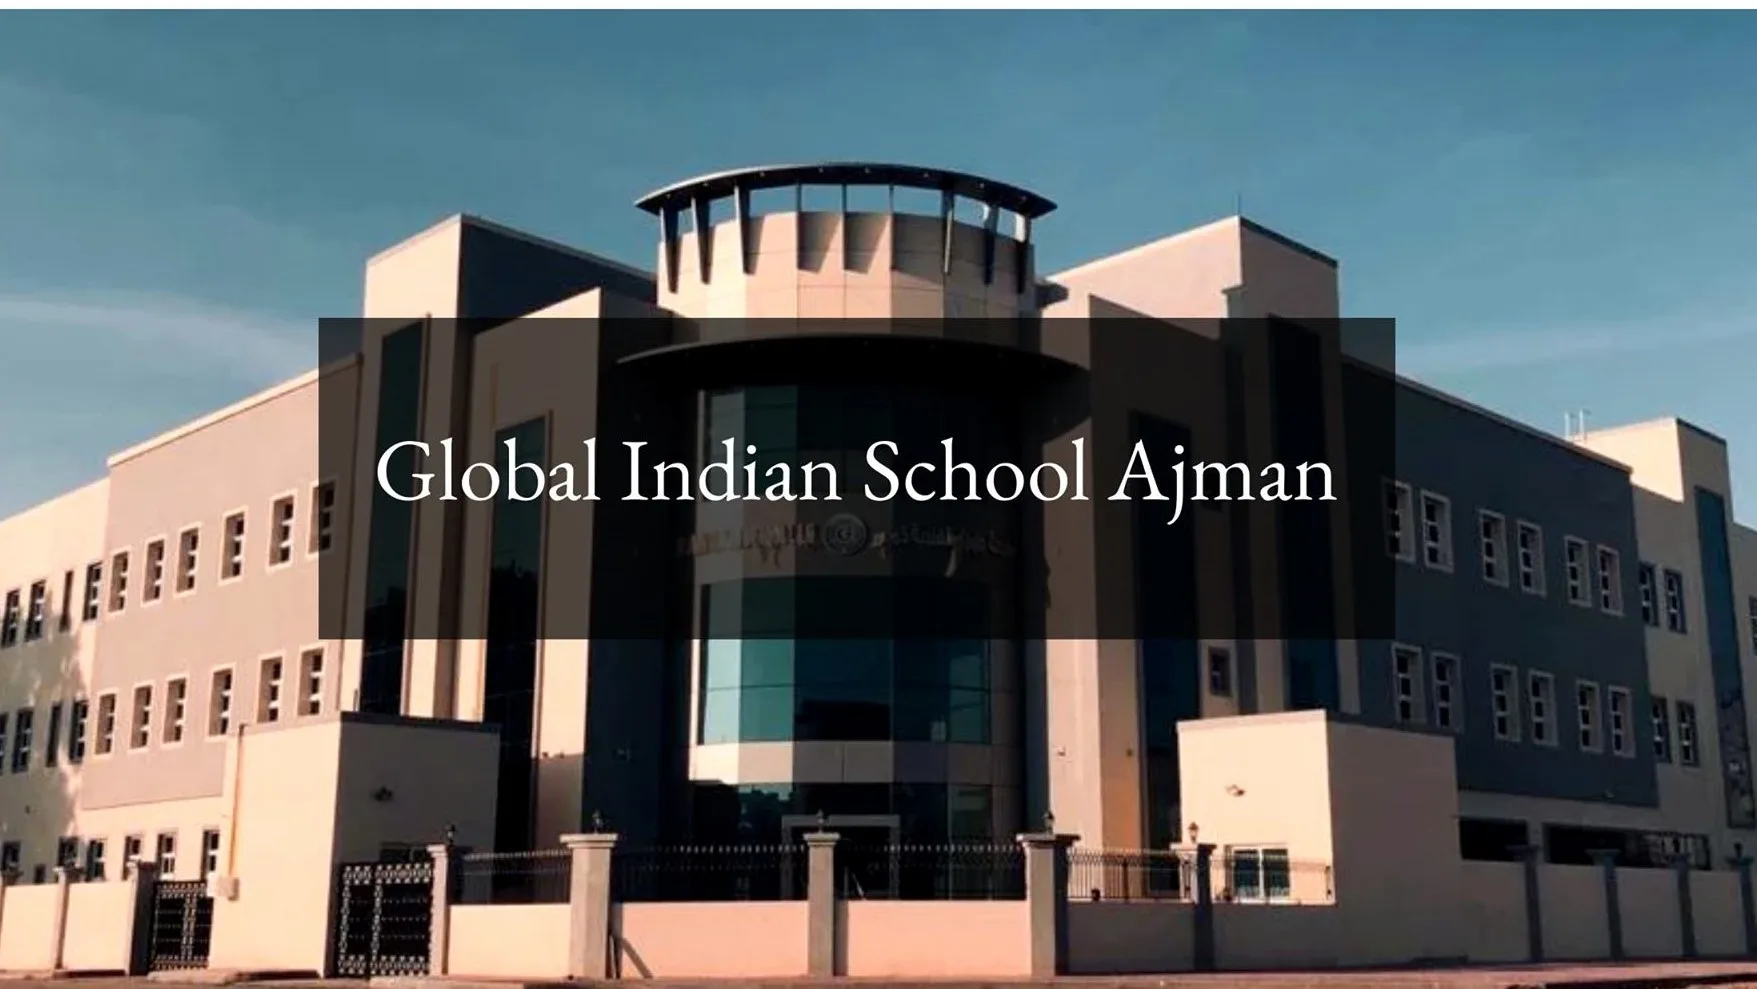 Global Indian Schools Ajman Main Building